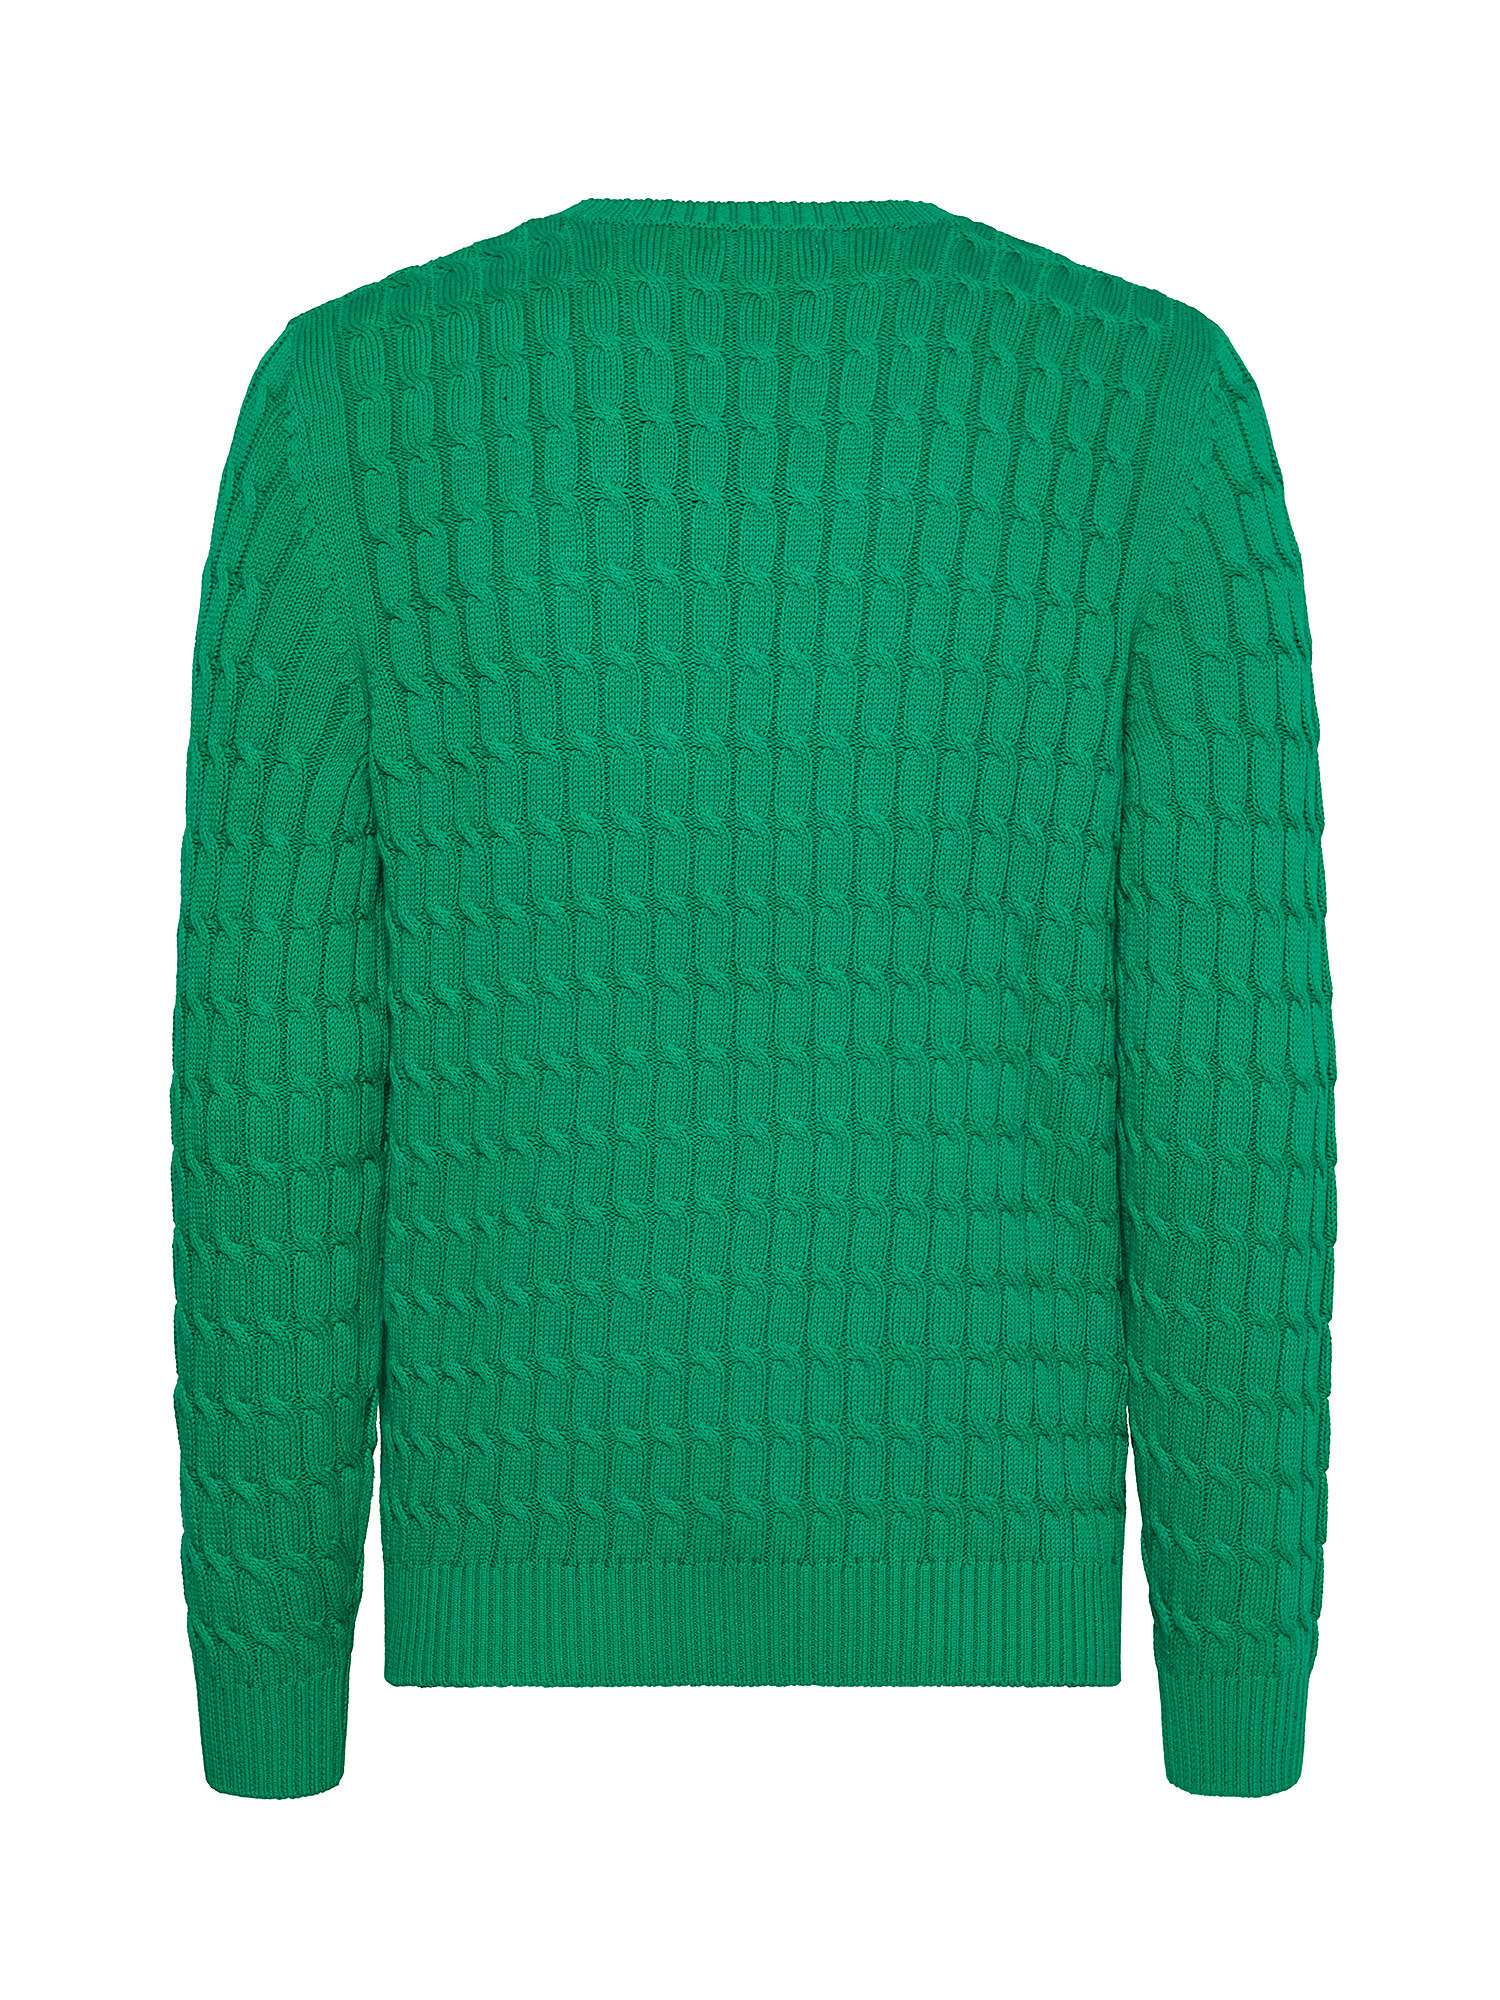 Luca D'Altieri - Crewneck sweater with pure cotton braids, Mint, large image number 1